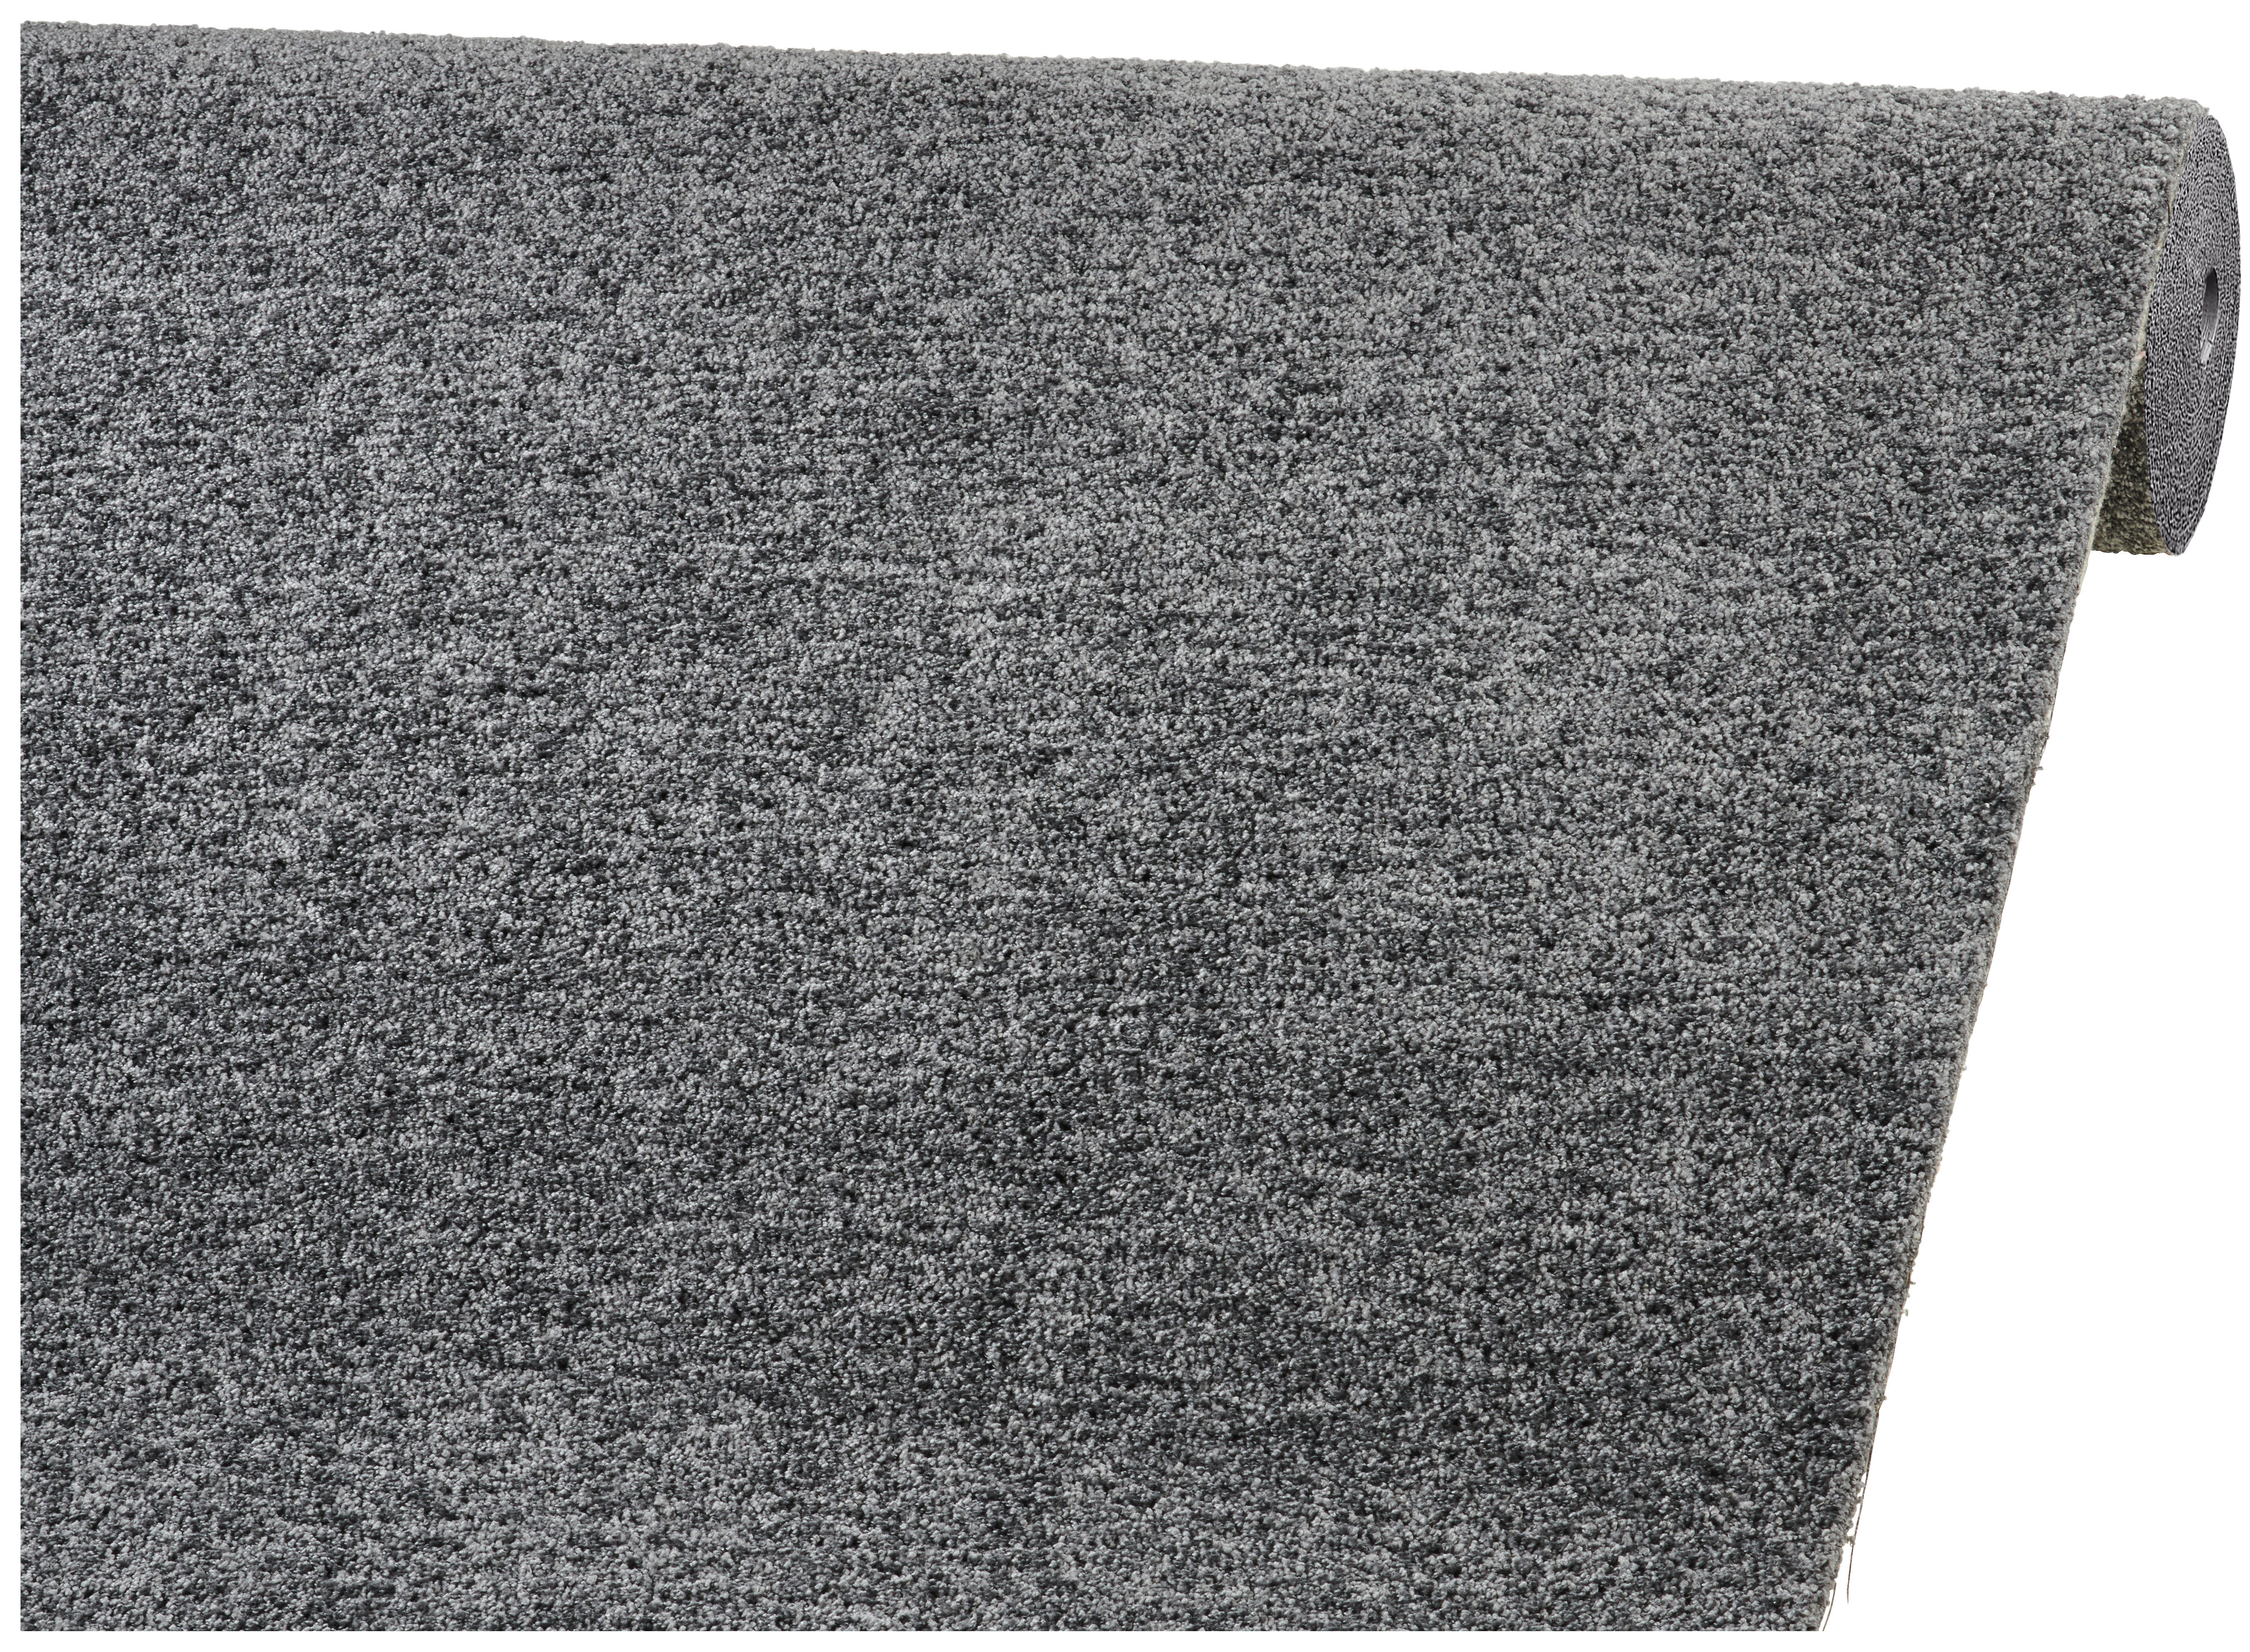 Nadelfilz teppichboden - Der Favorit unserer Produkttester